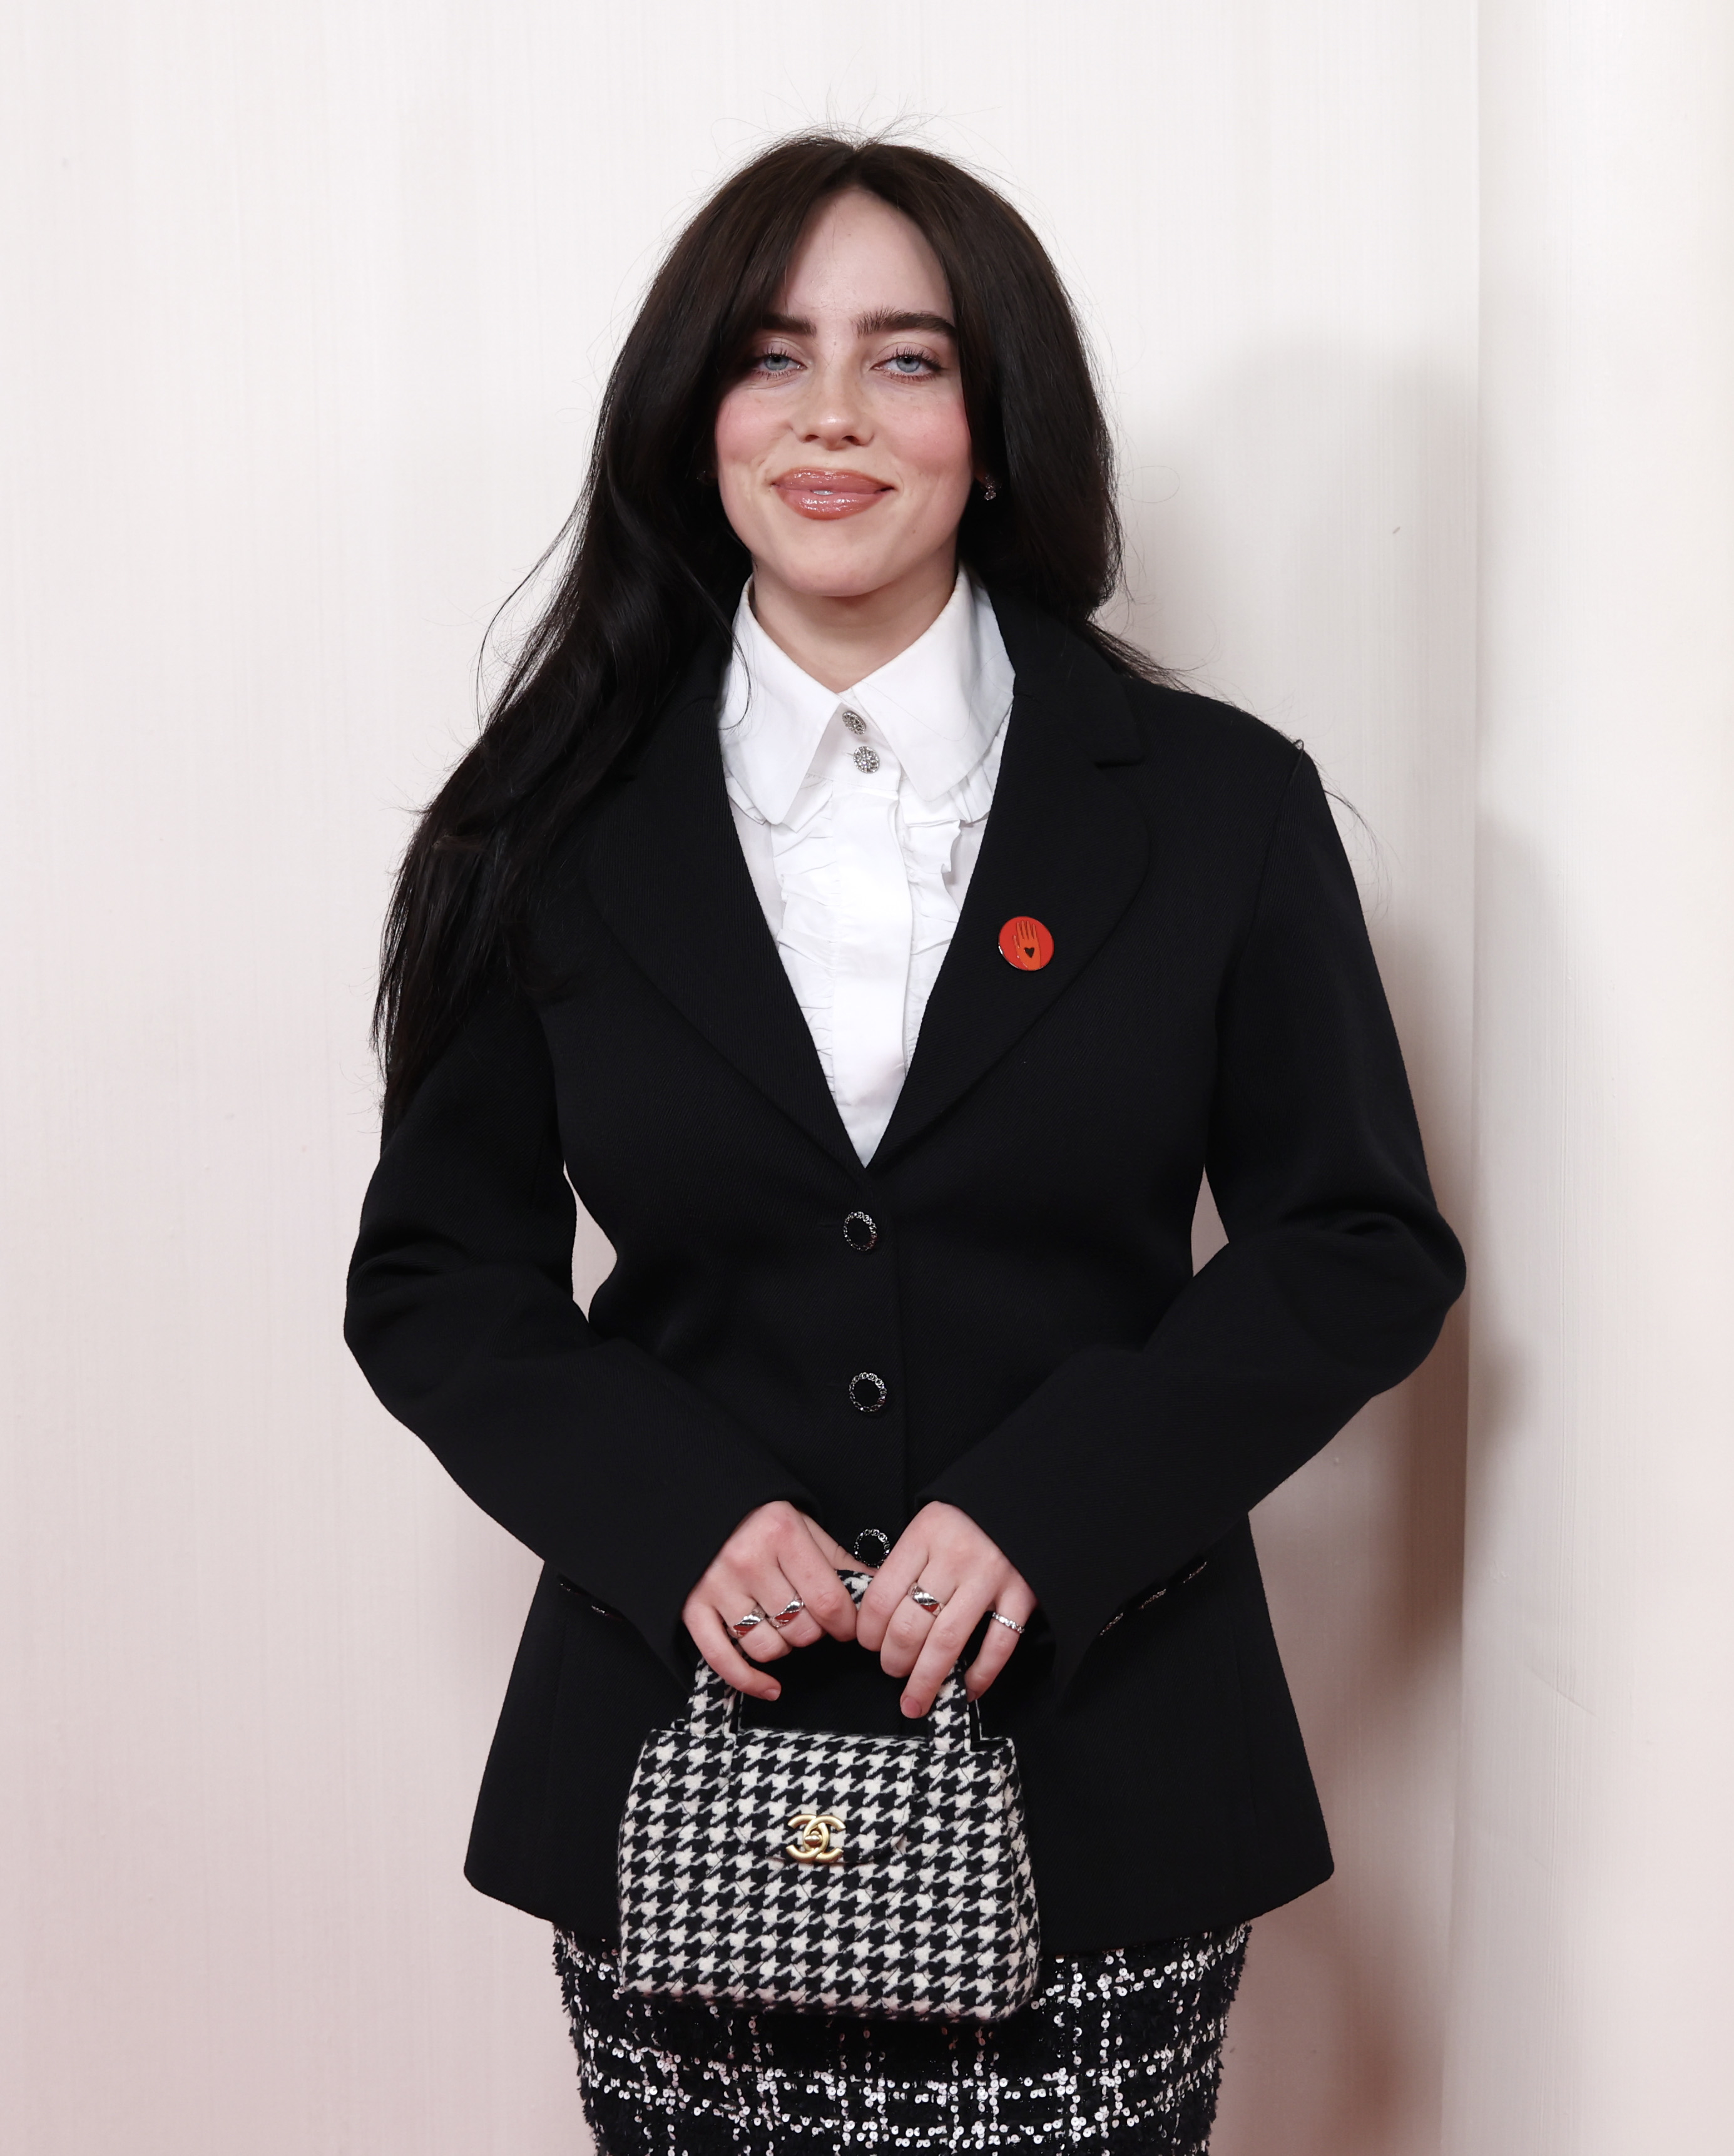 Billie Eilish in a blazer, shirt, holding a checkered handbag